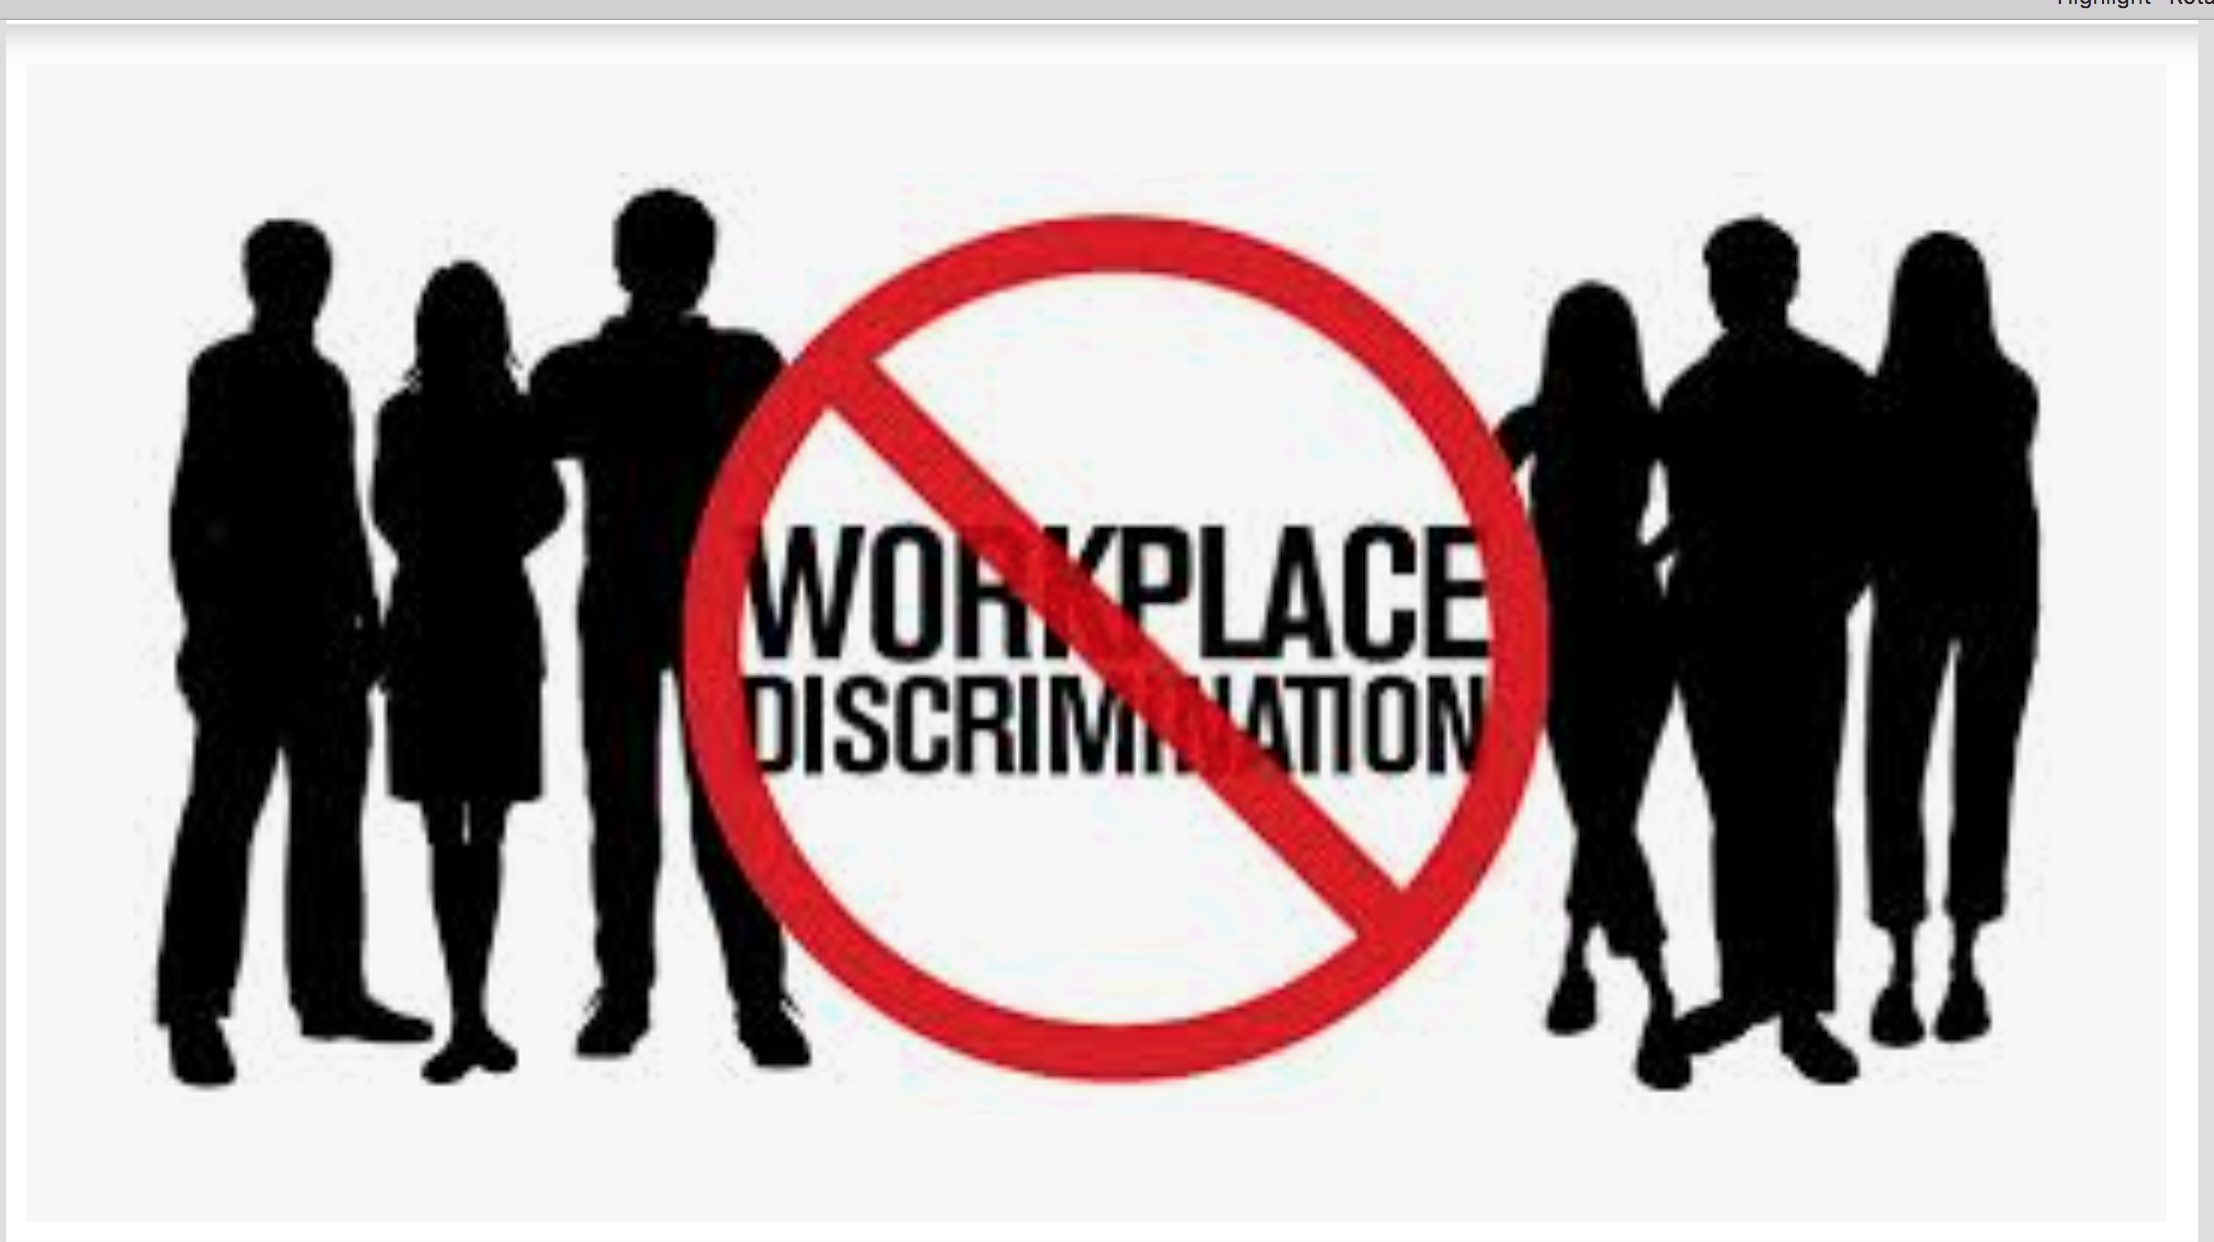 Тема дискриминации. Дискриминация картинки. Дискриминация рисунок. Дискриминация на рынке труда. Трудовая дискриминация.